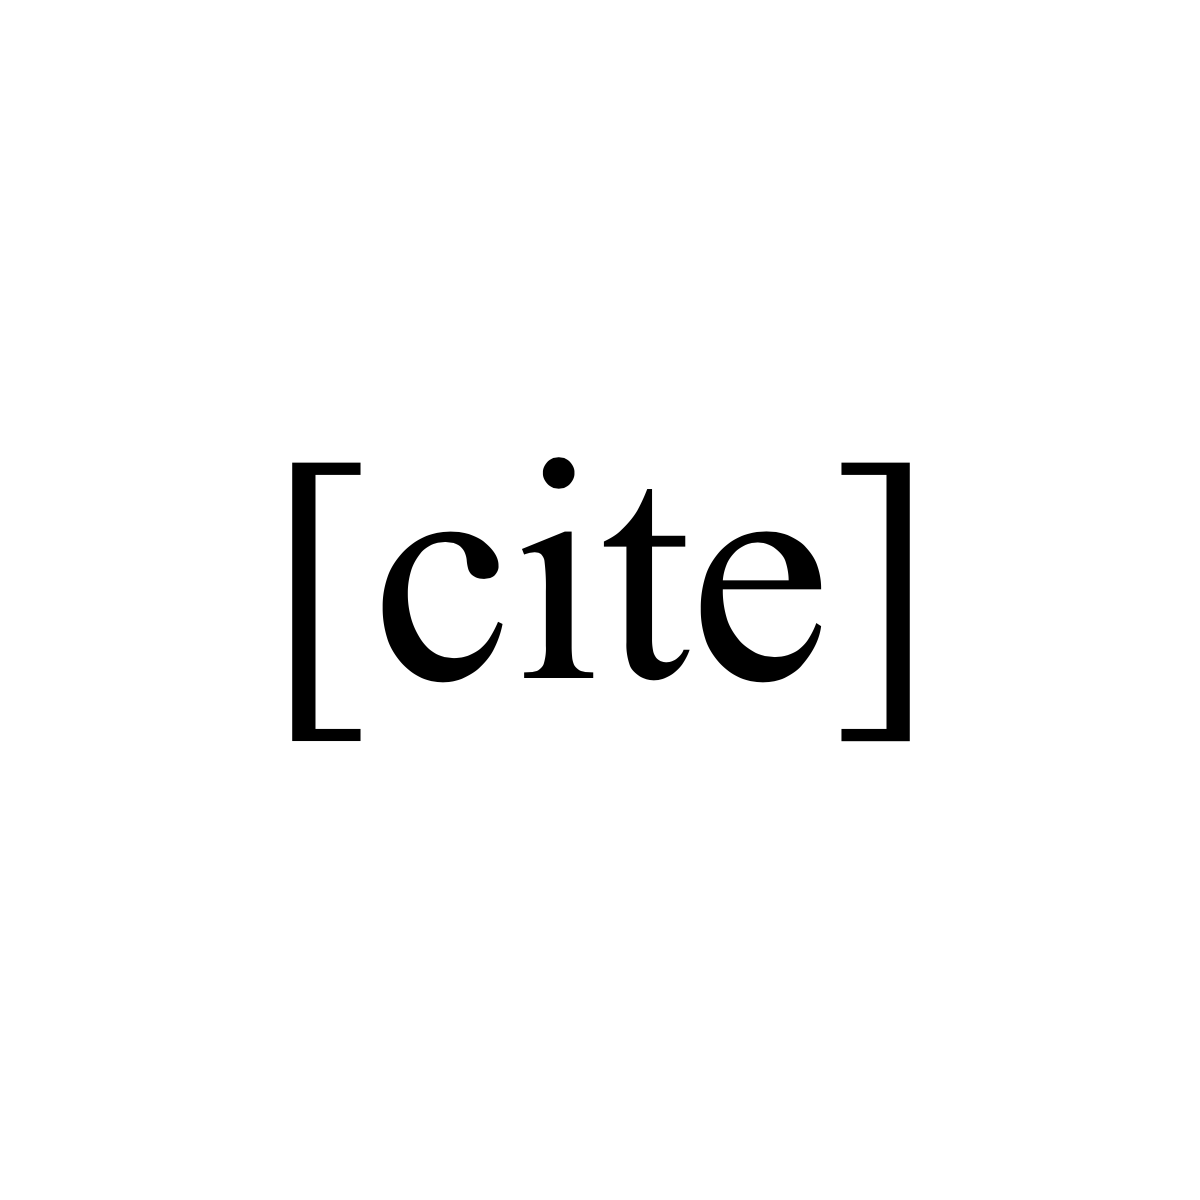 CITE - Citation